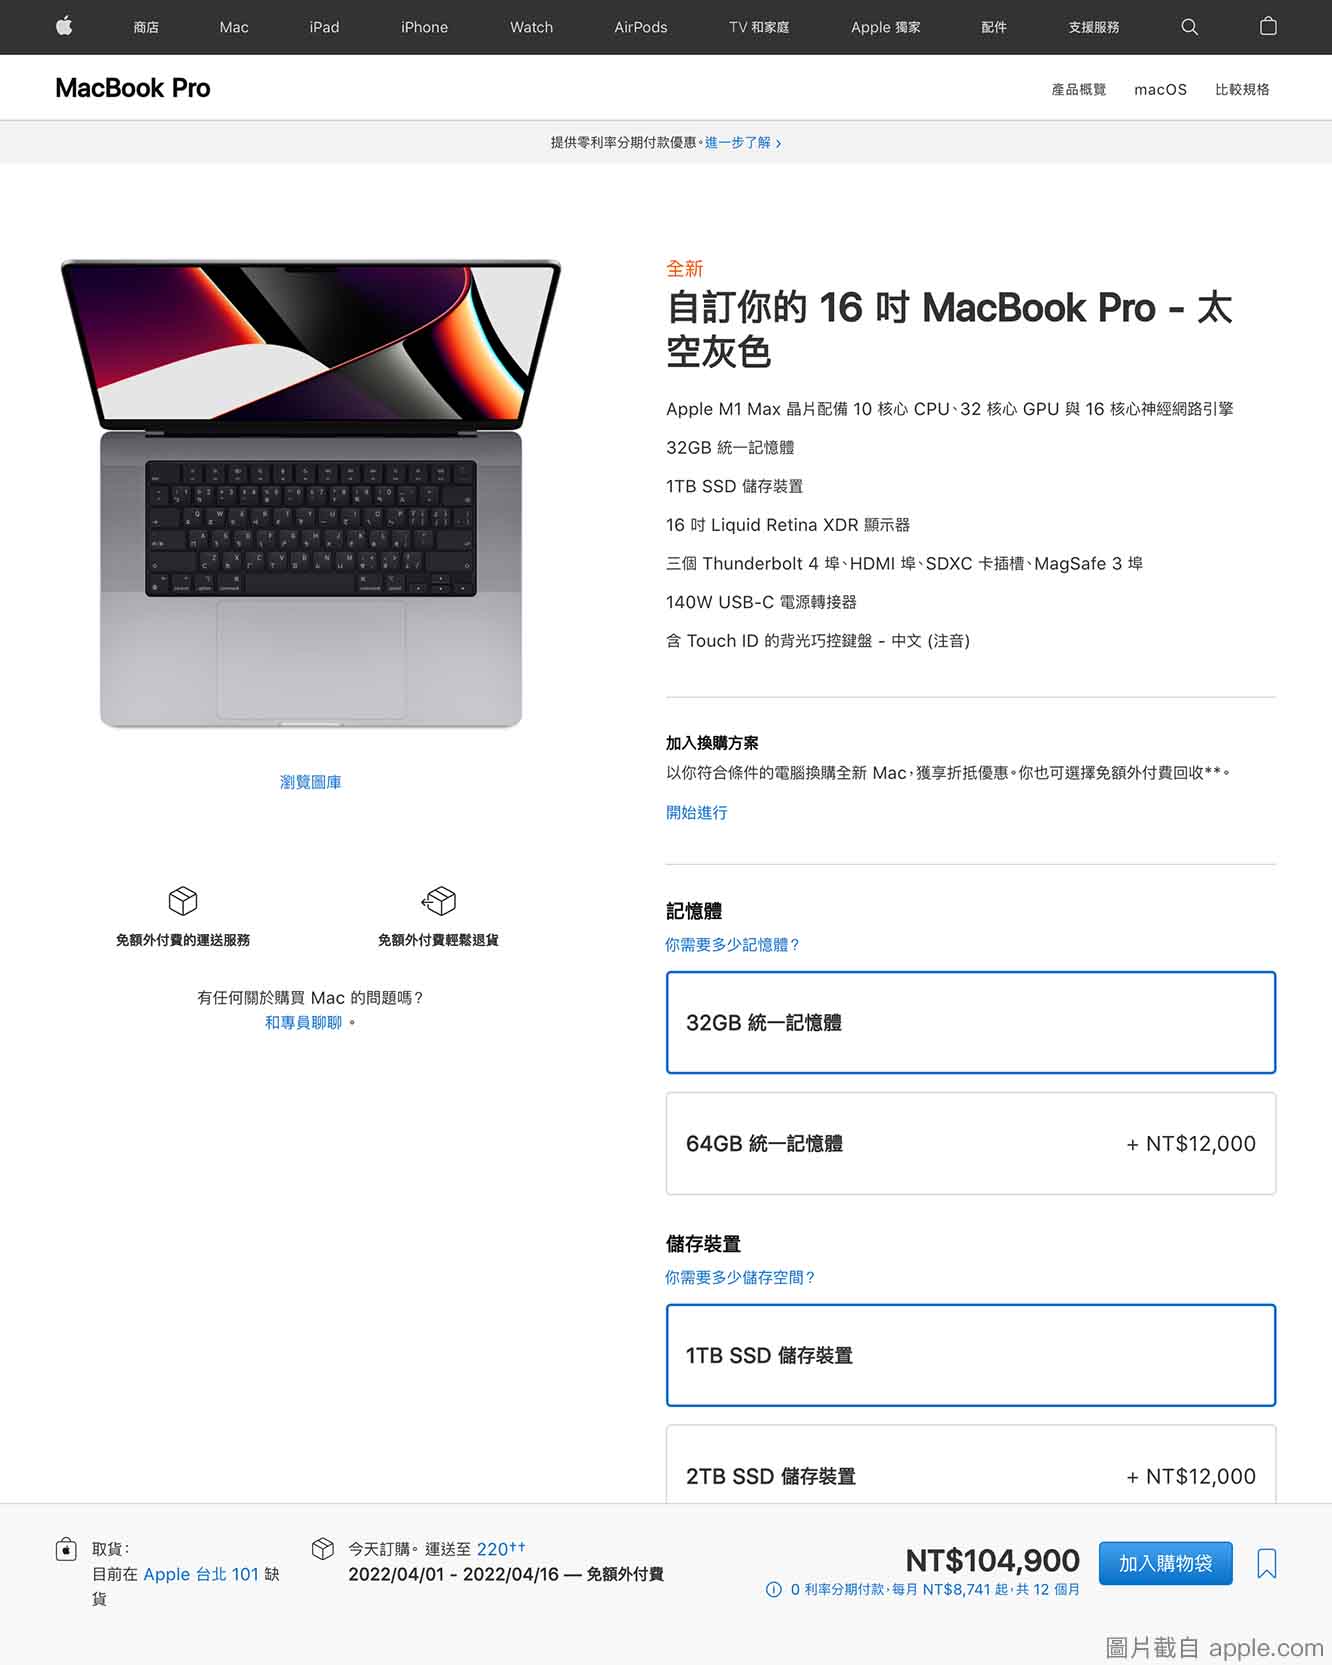 MacBook Pro 訂購頁面 - Apple 購物車/電商系統